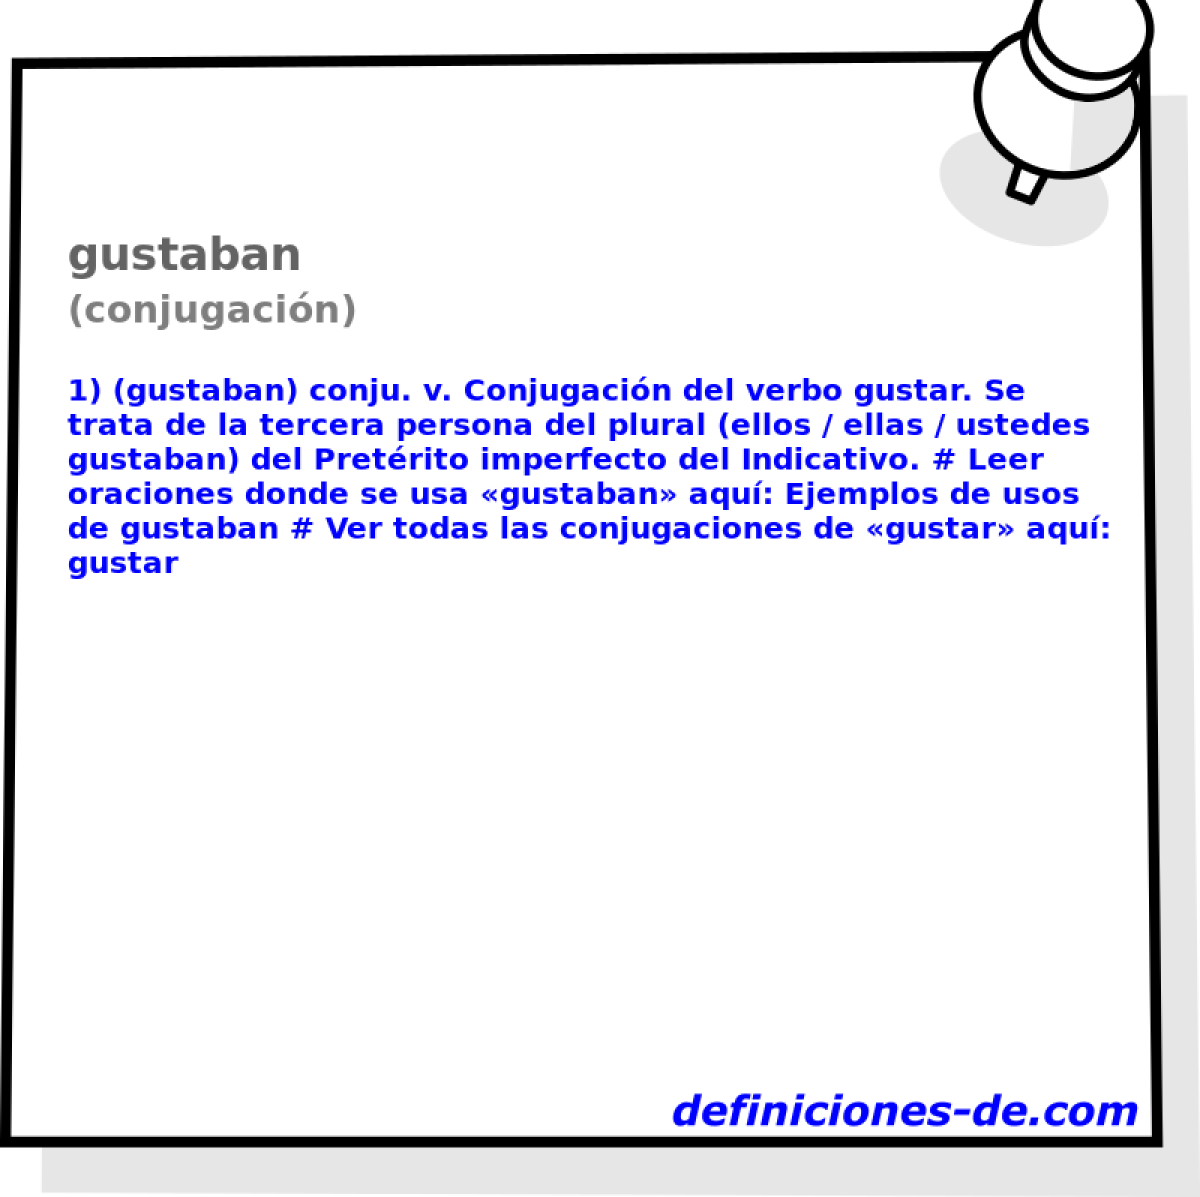 gustaban (conjugacin)